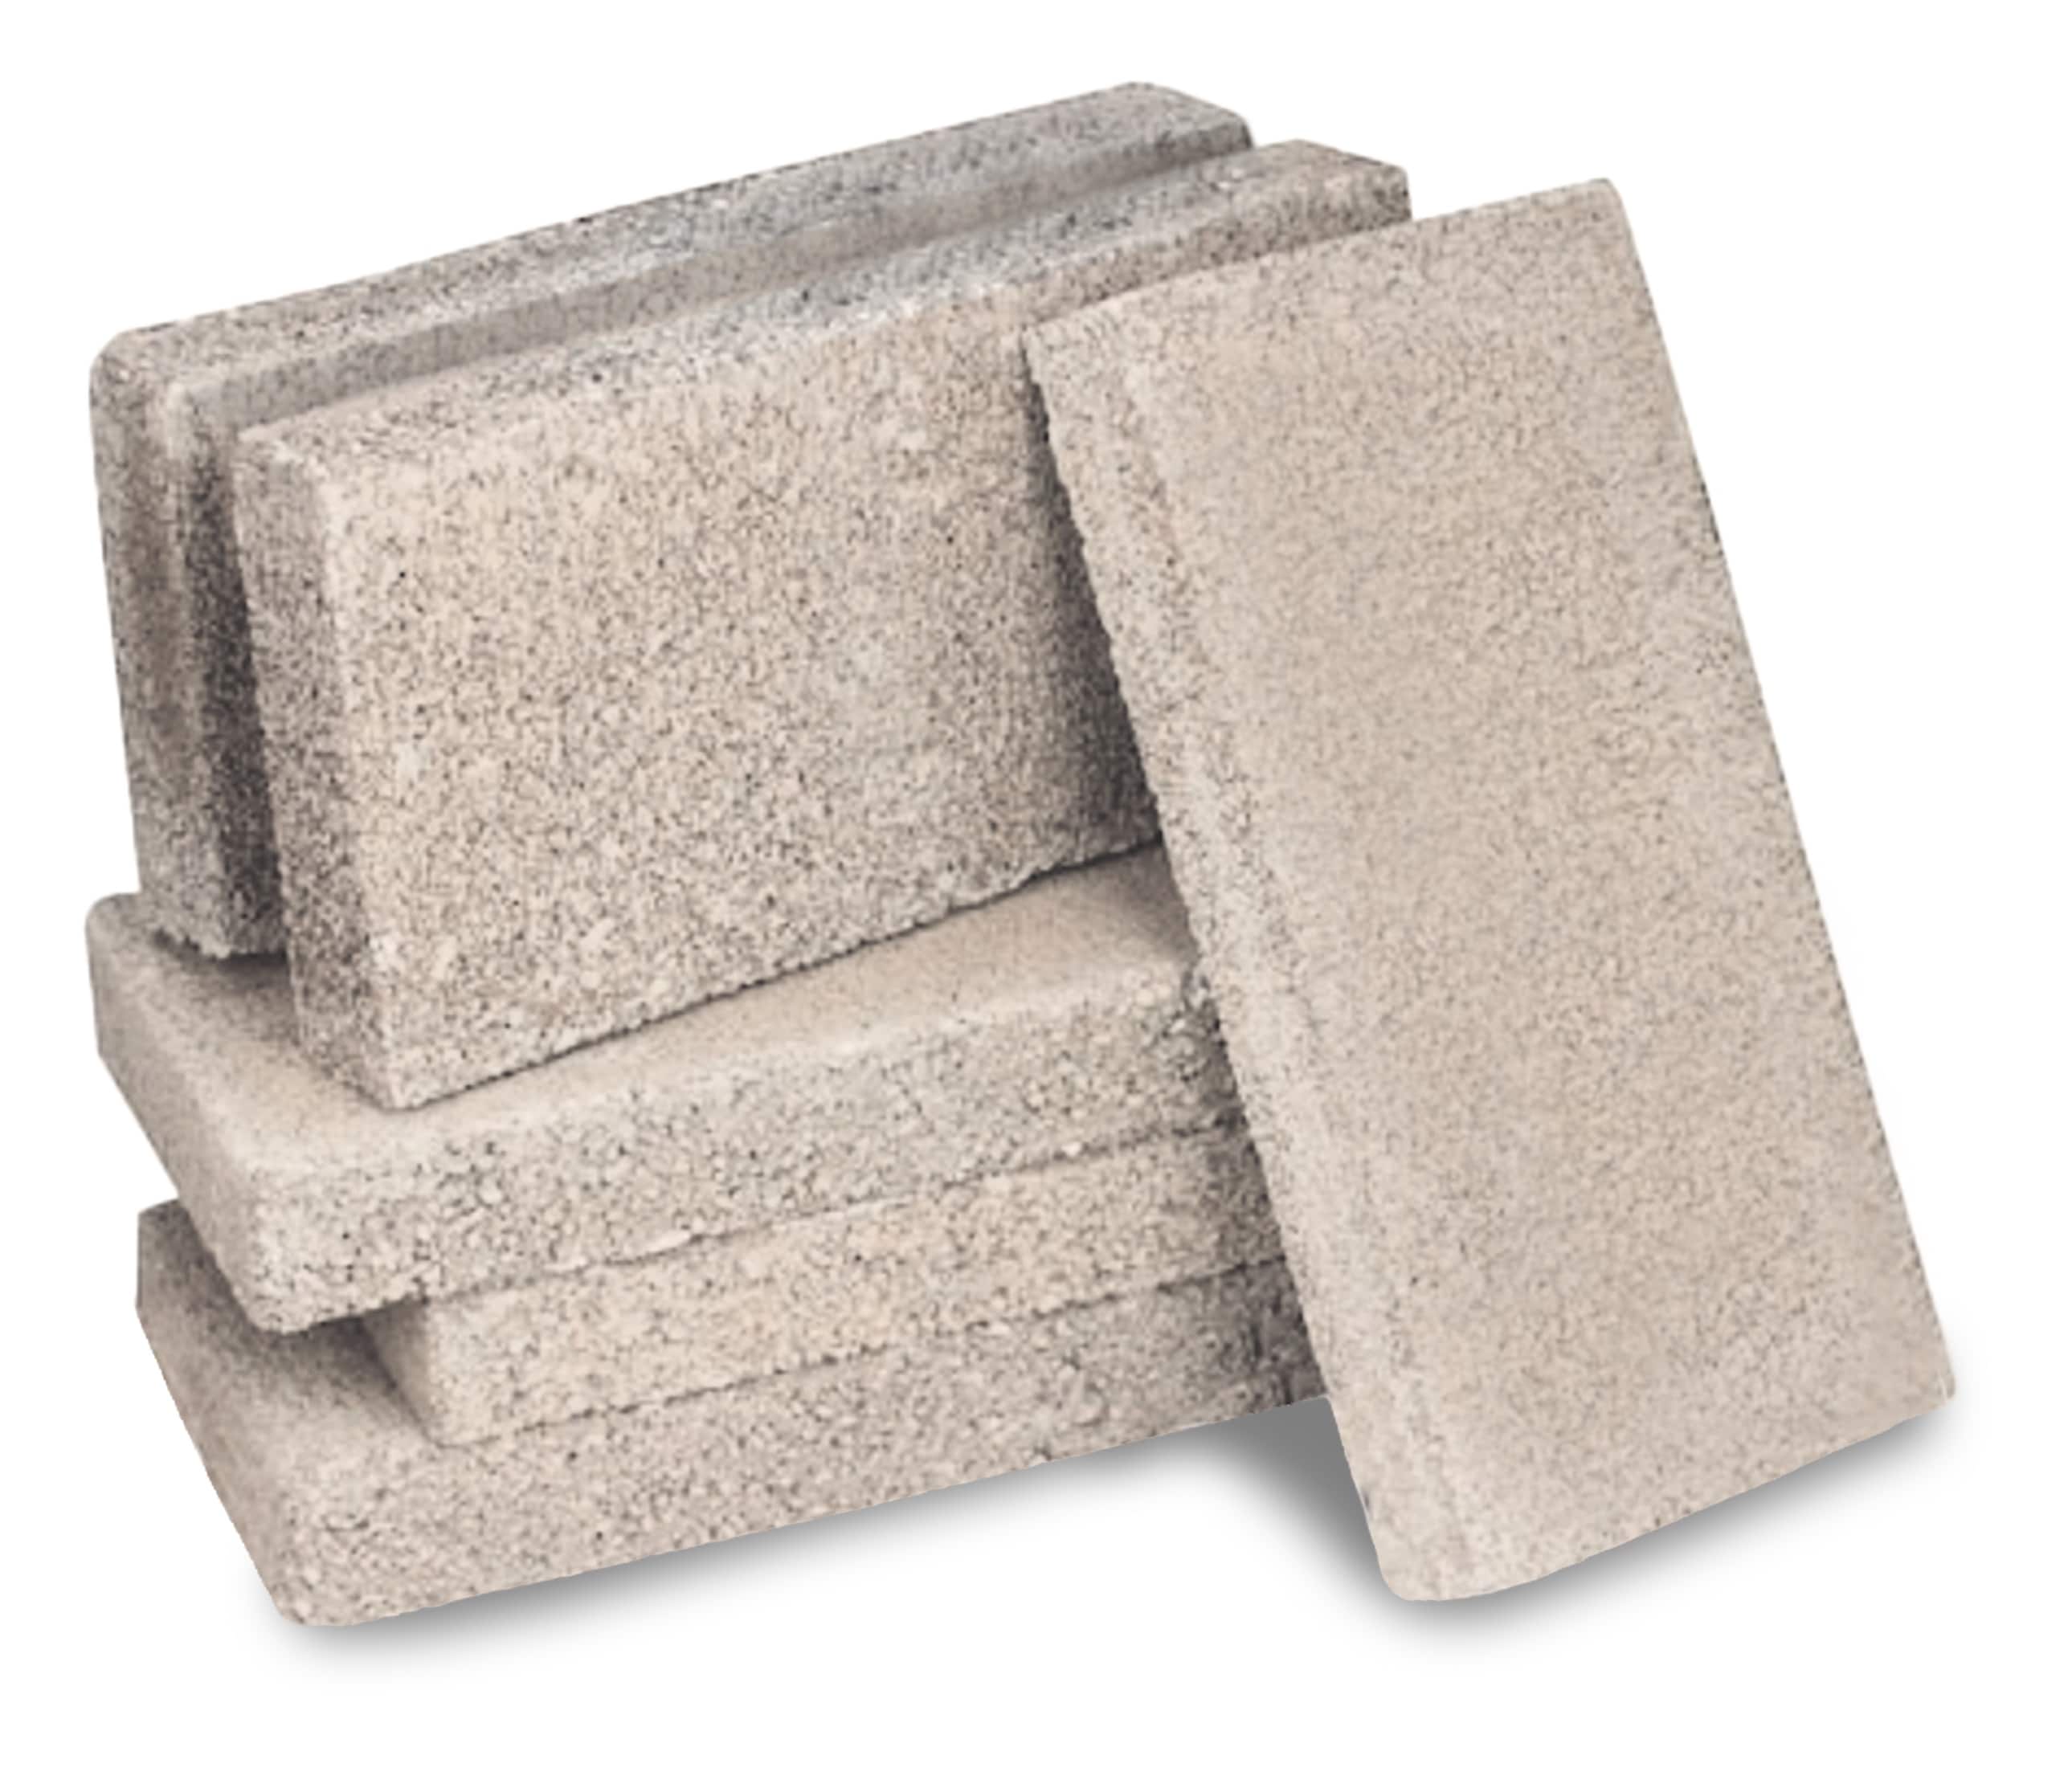 US Stove Firebrick 4.5 x 9 x 1.25 inch Wood Stove Ceramic Fire Bricks (12 Pack)